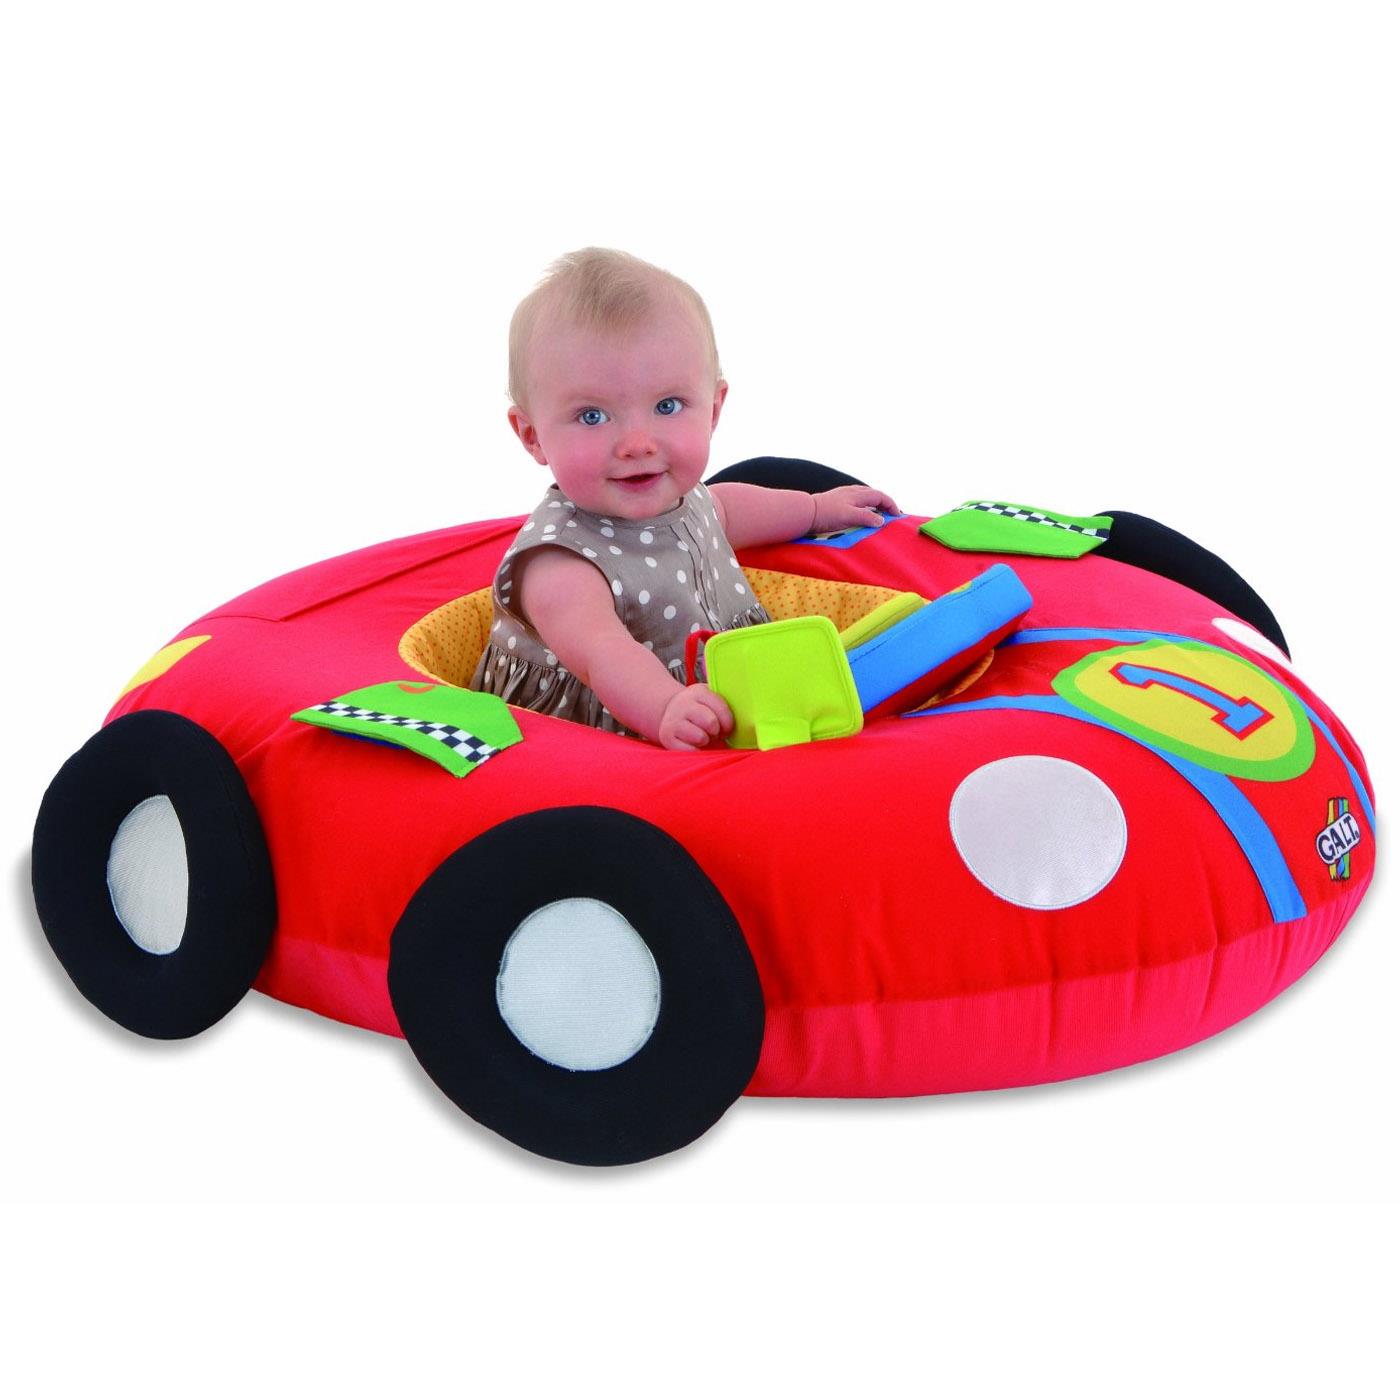 Galt Toys 1003871 Playnest Car| Blink Kuwait